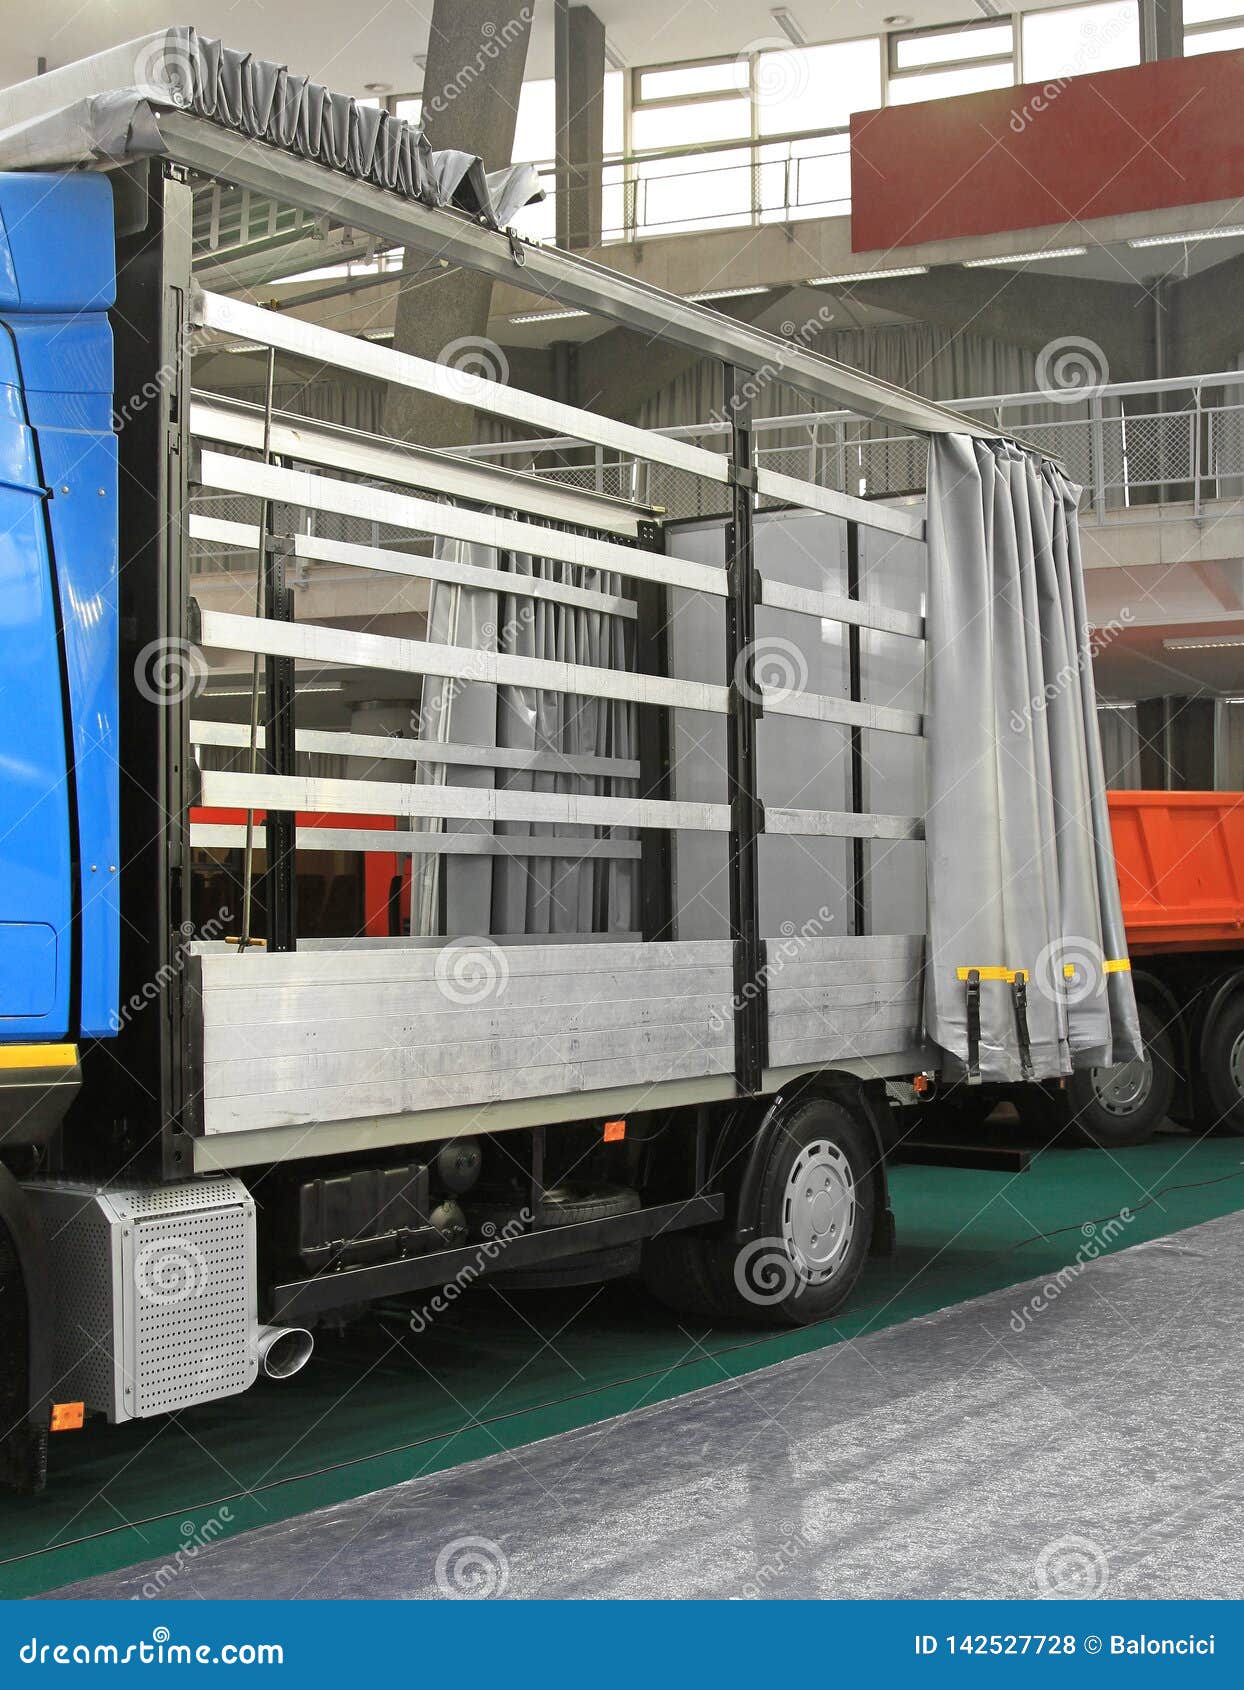 Toile de camion photo stock. Image du véhicule, aluminium - 142527728